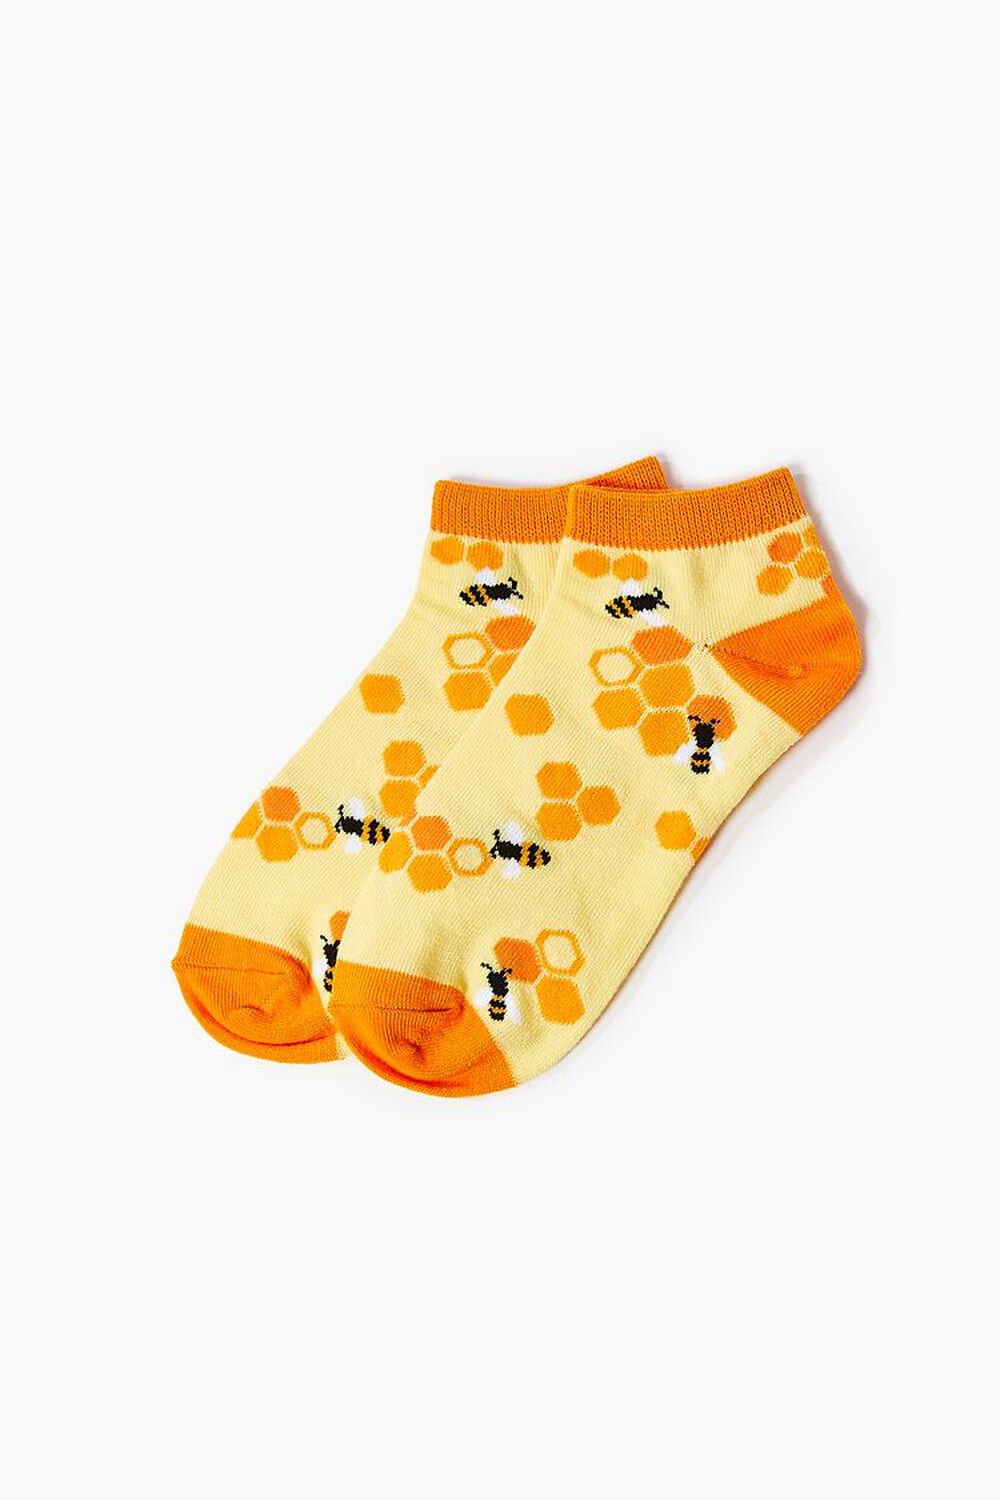 Bee Print Colorblock Ankle Socks, image 2